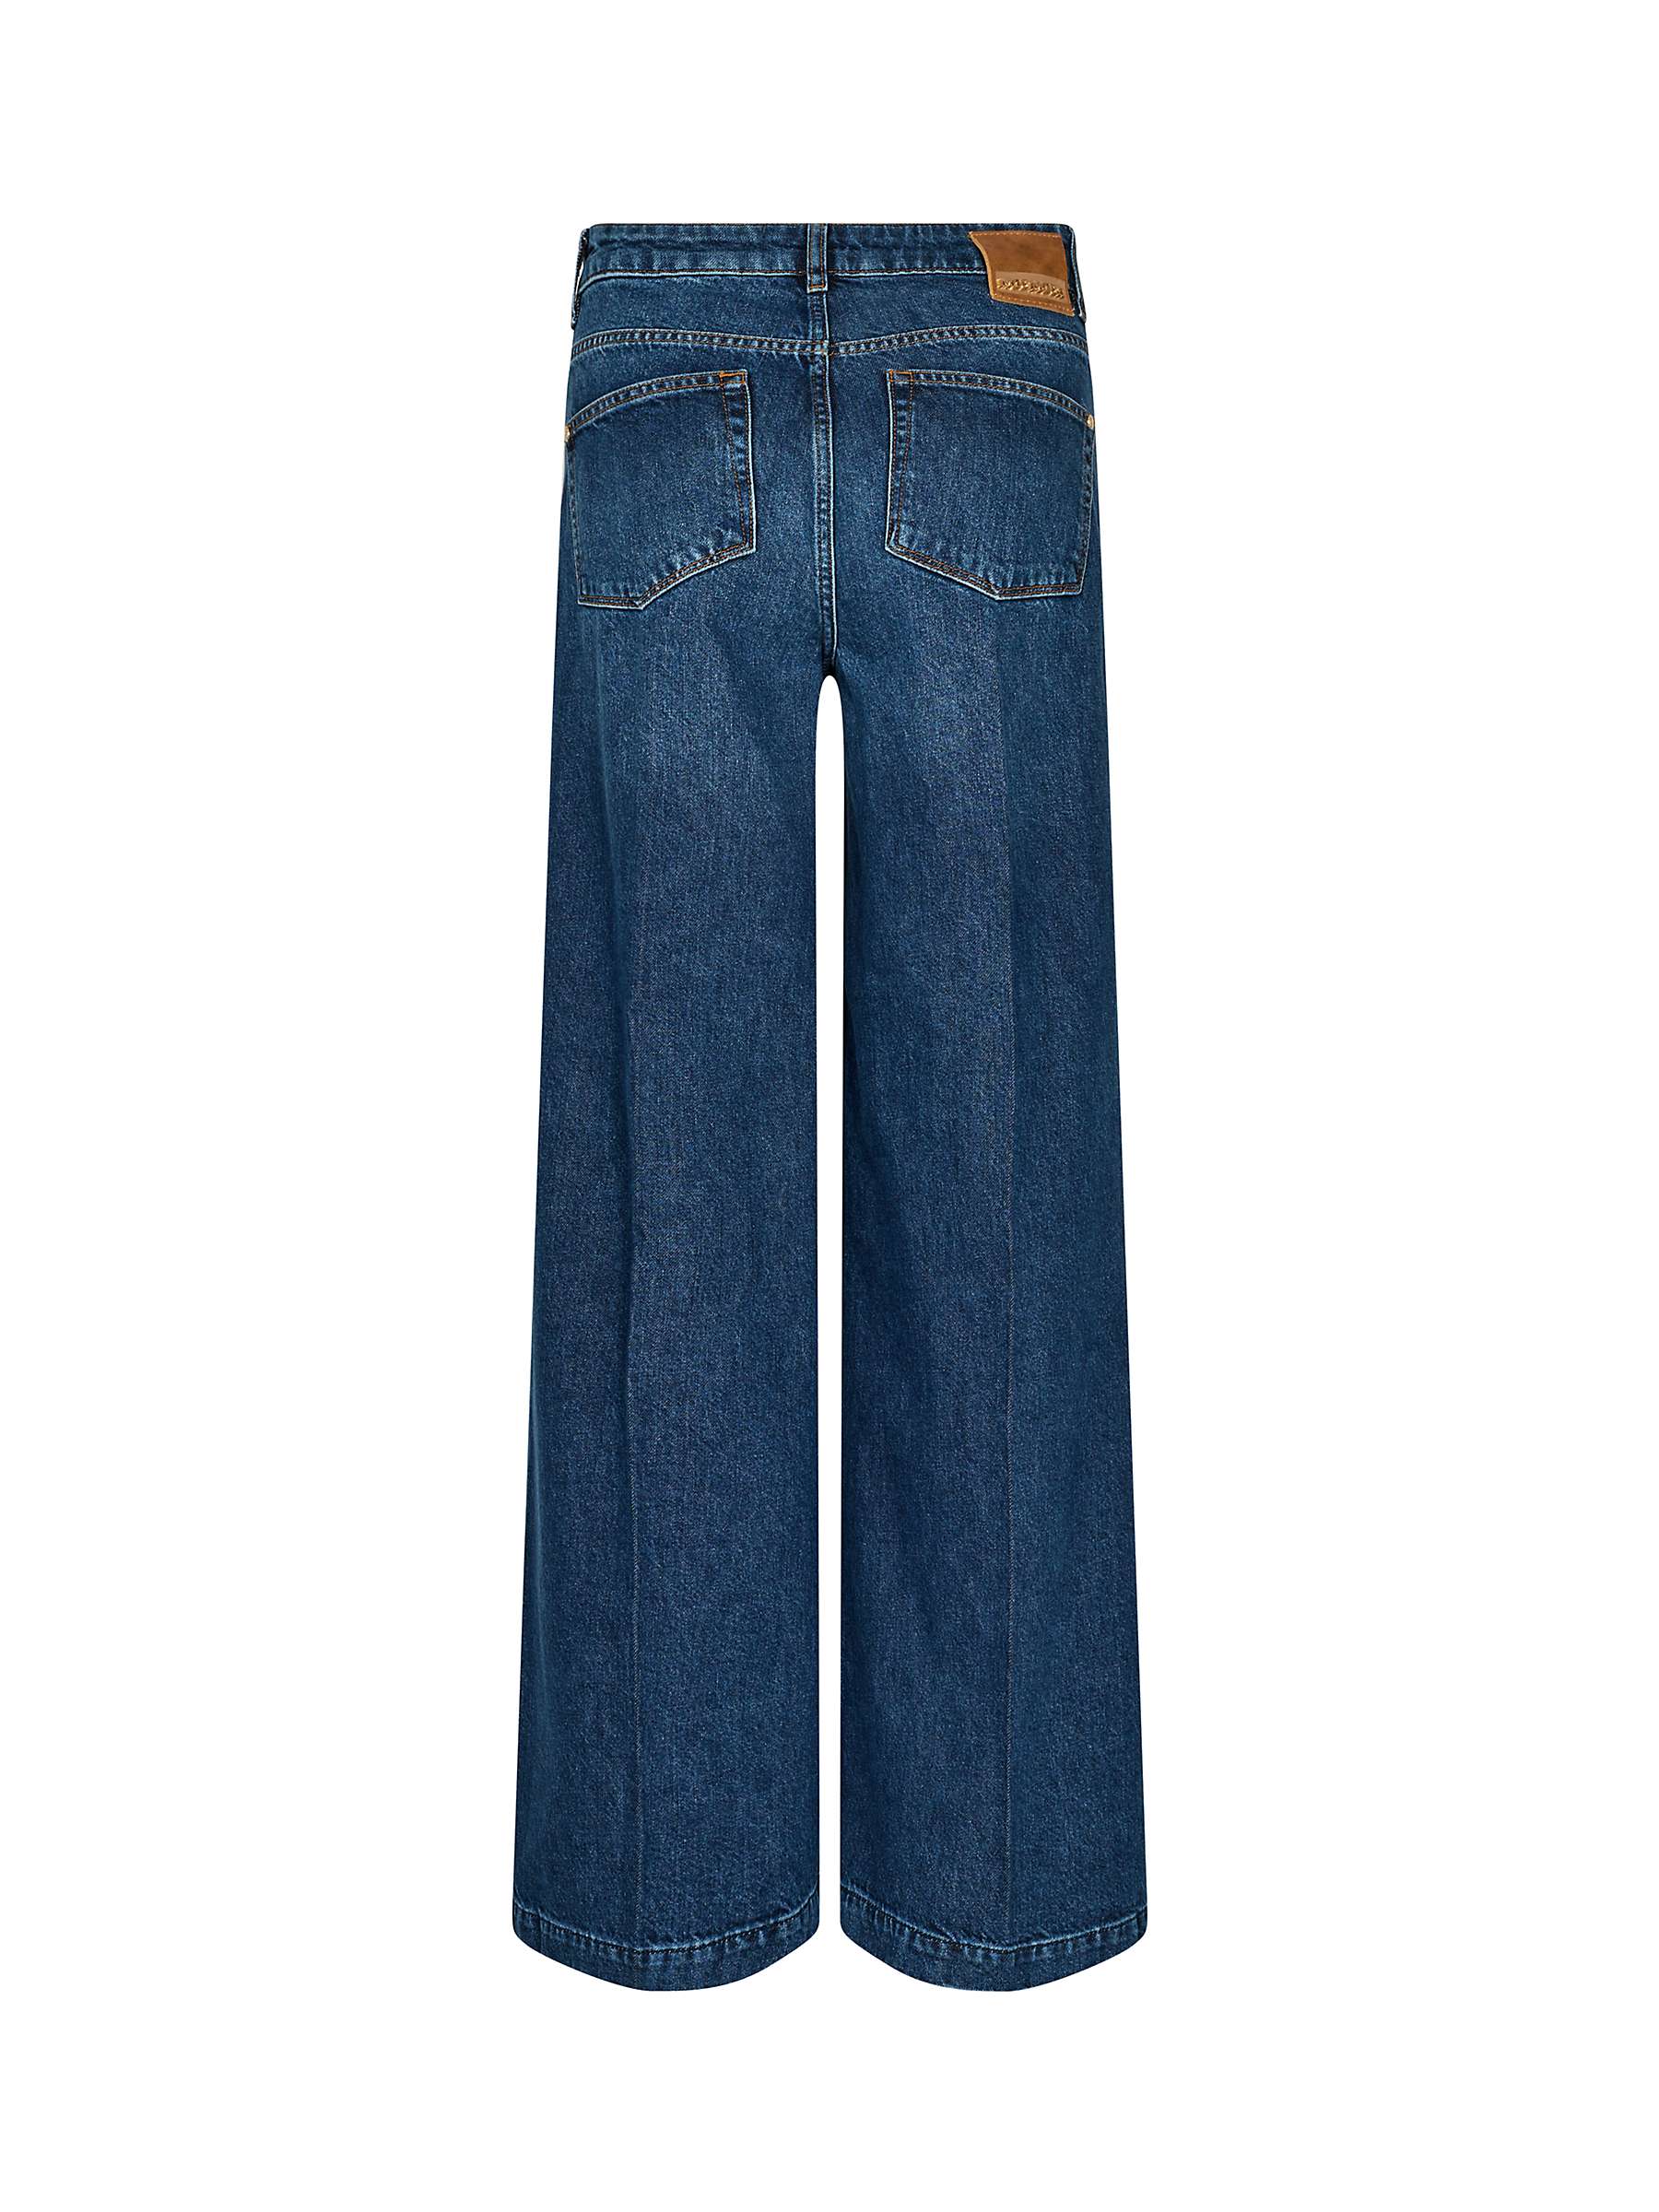 Buy MOS MOSH Colette Sassy High Rise Jeans, Blue Online at johnlewis.com